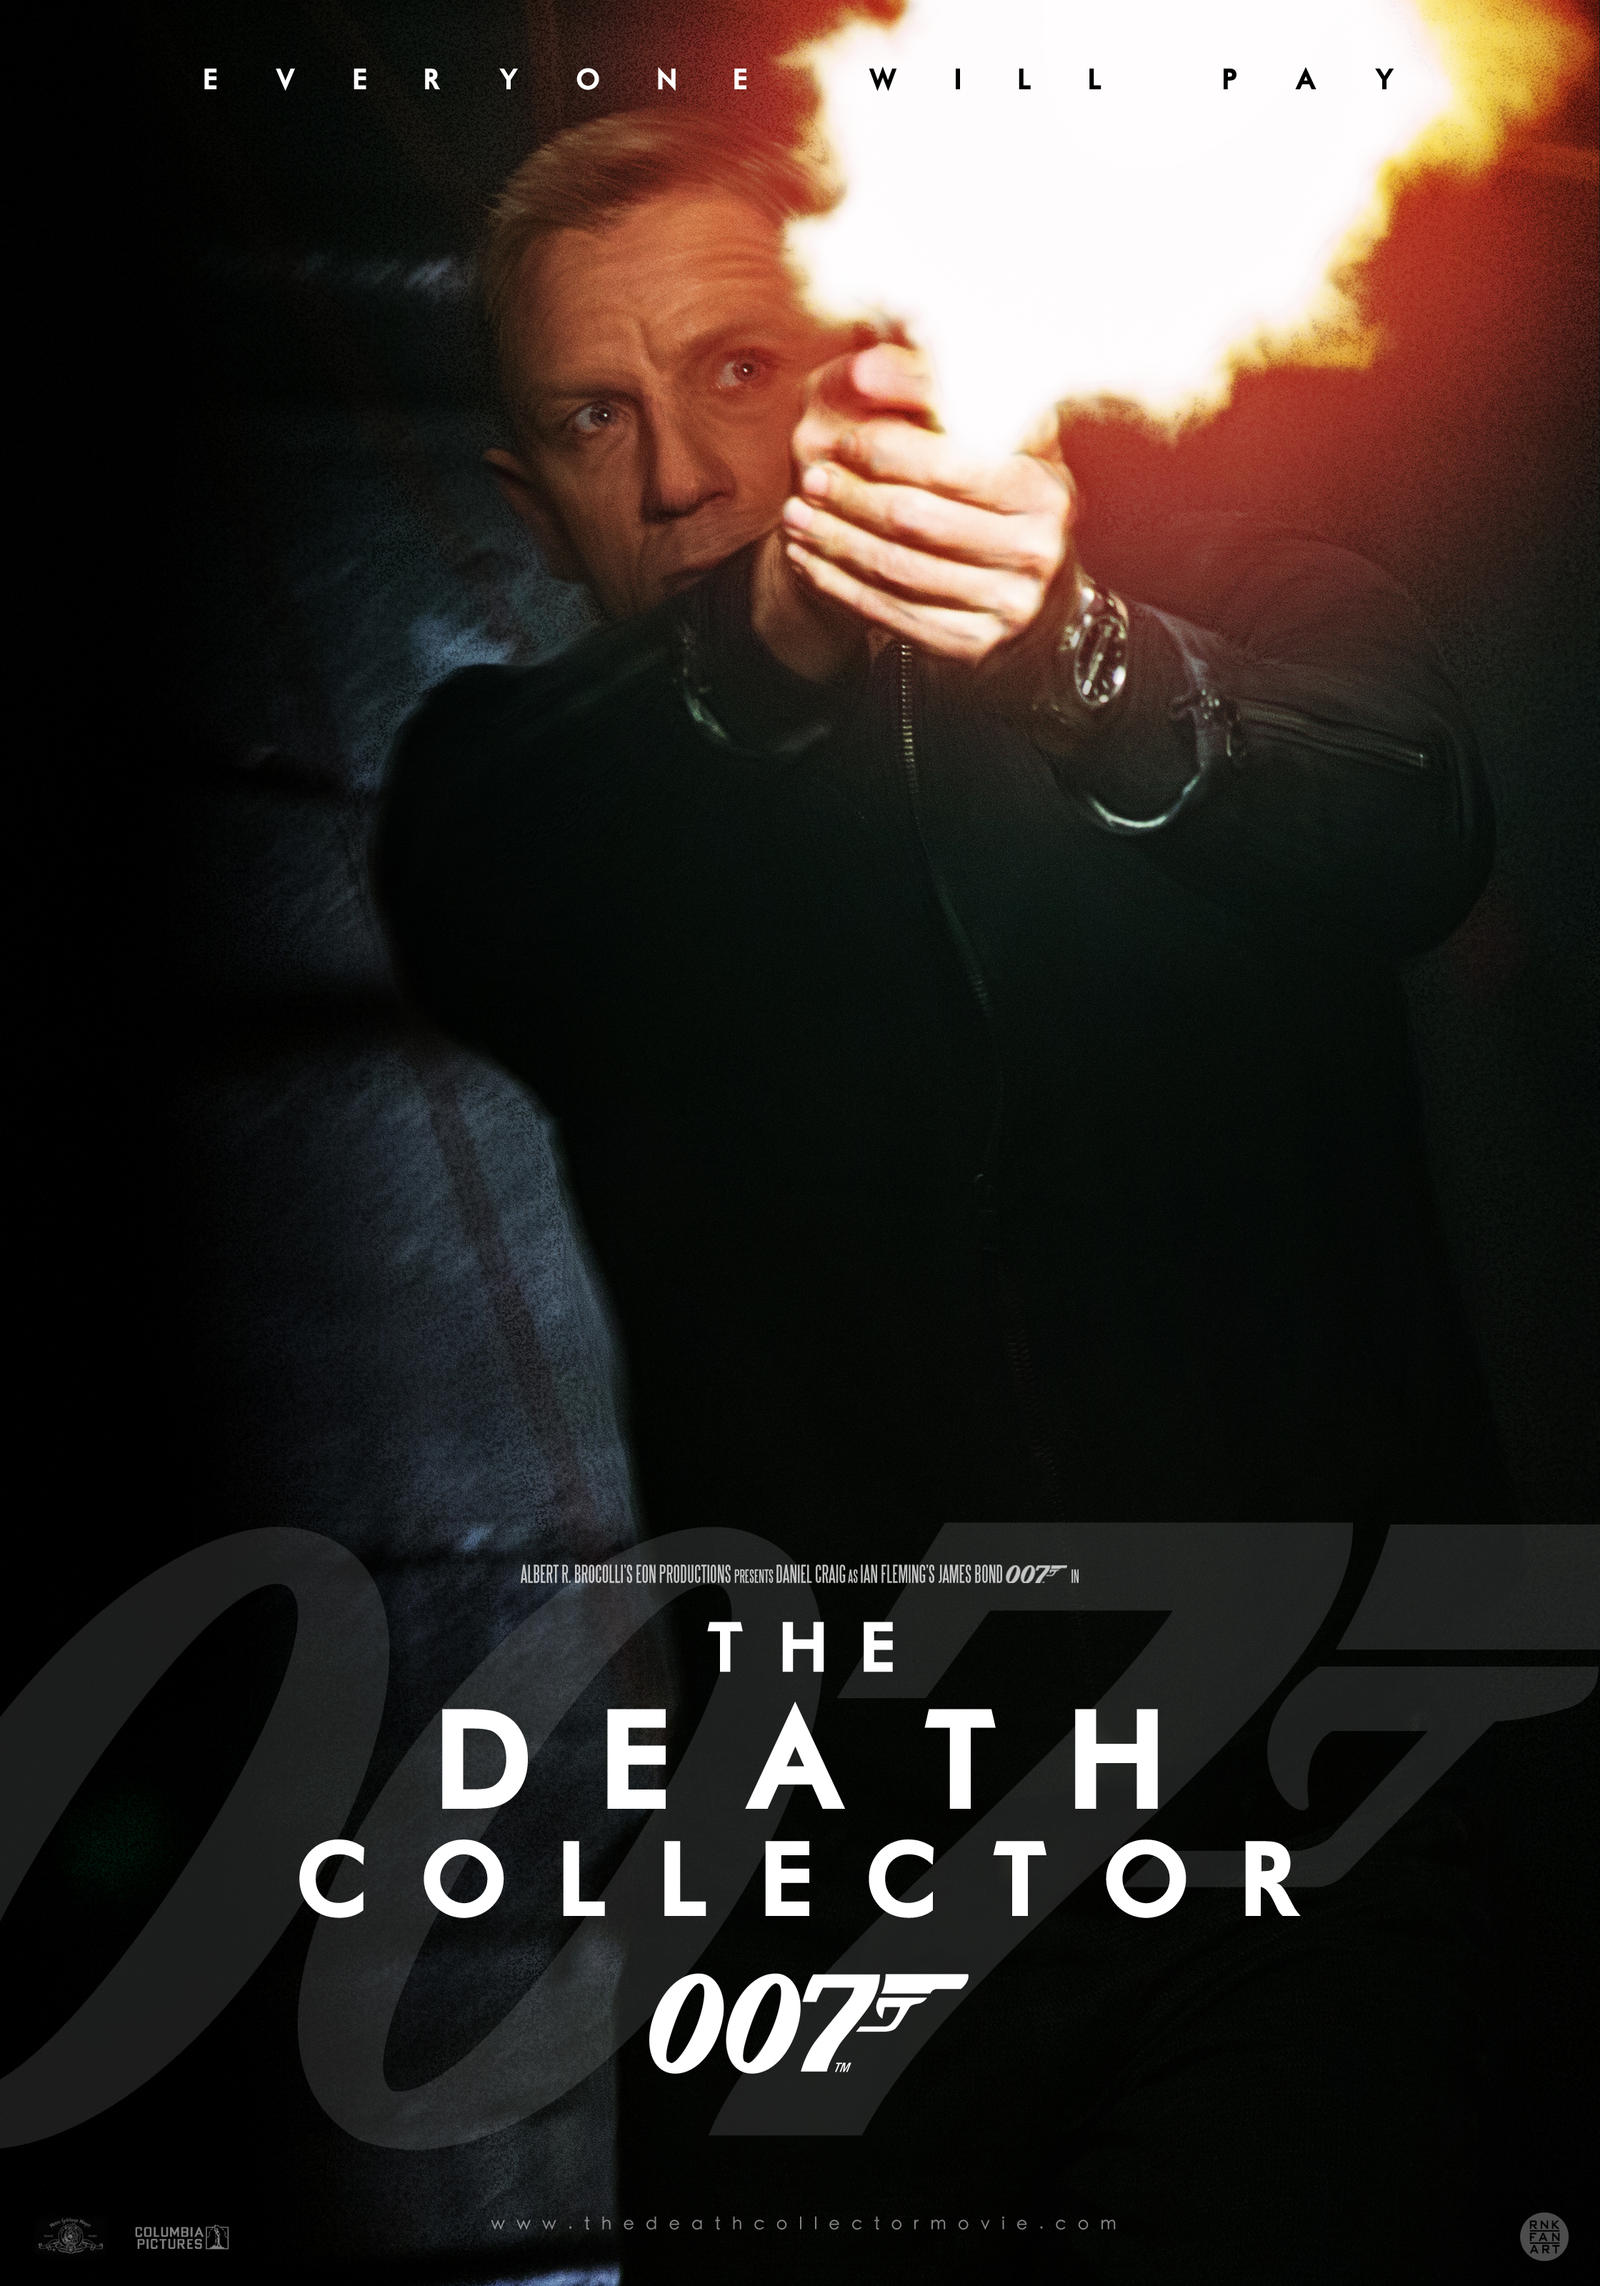 james_bond_25__the_death_collector_teaser_poster_b_by_gobi_1-da8asrr.jpg